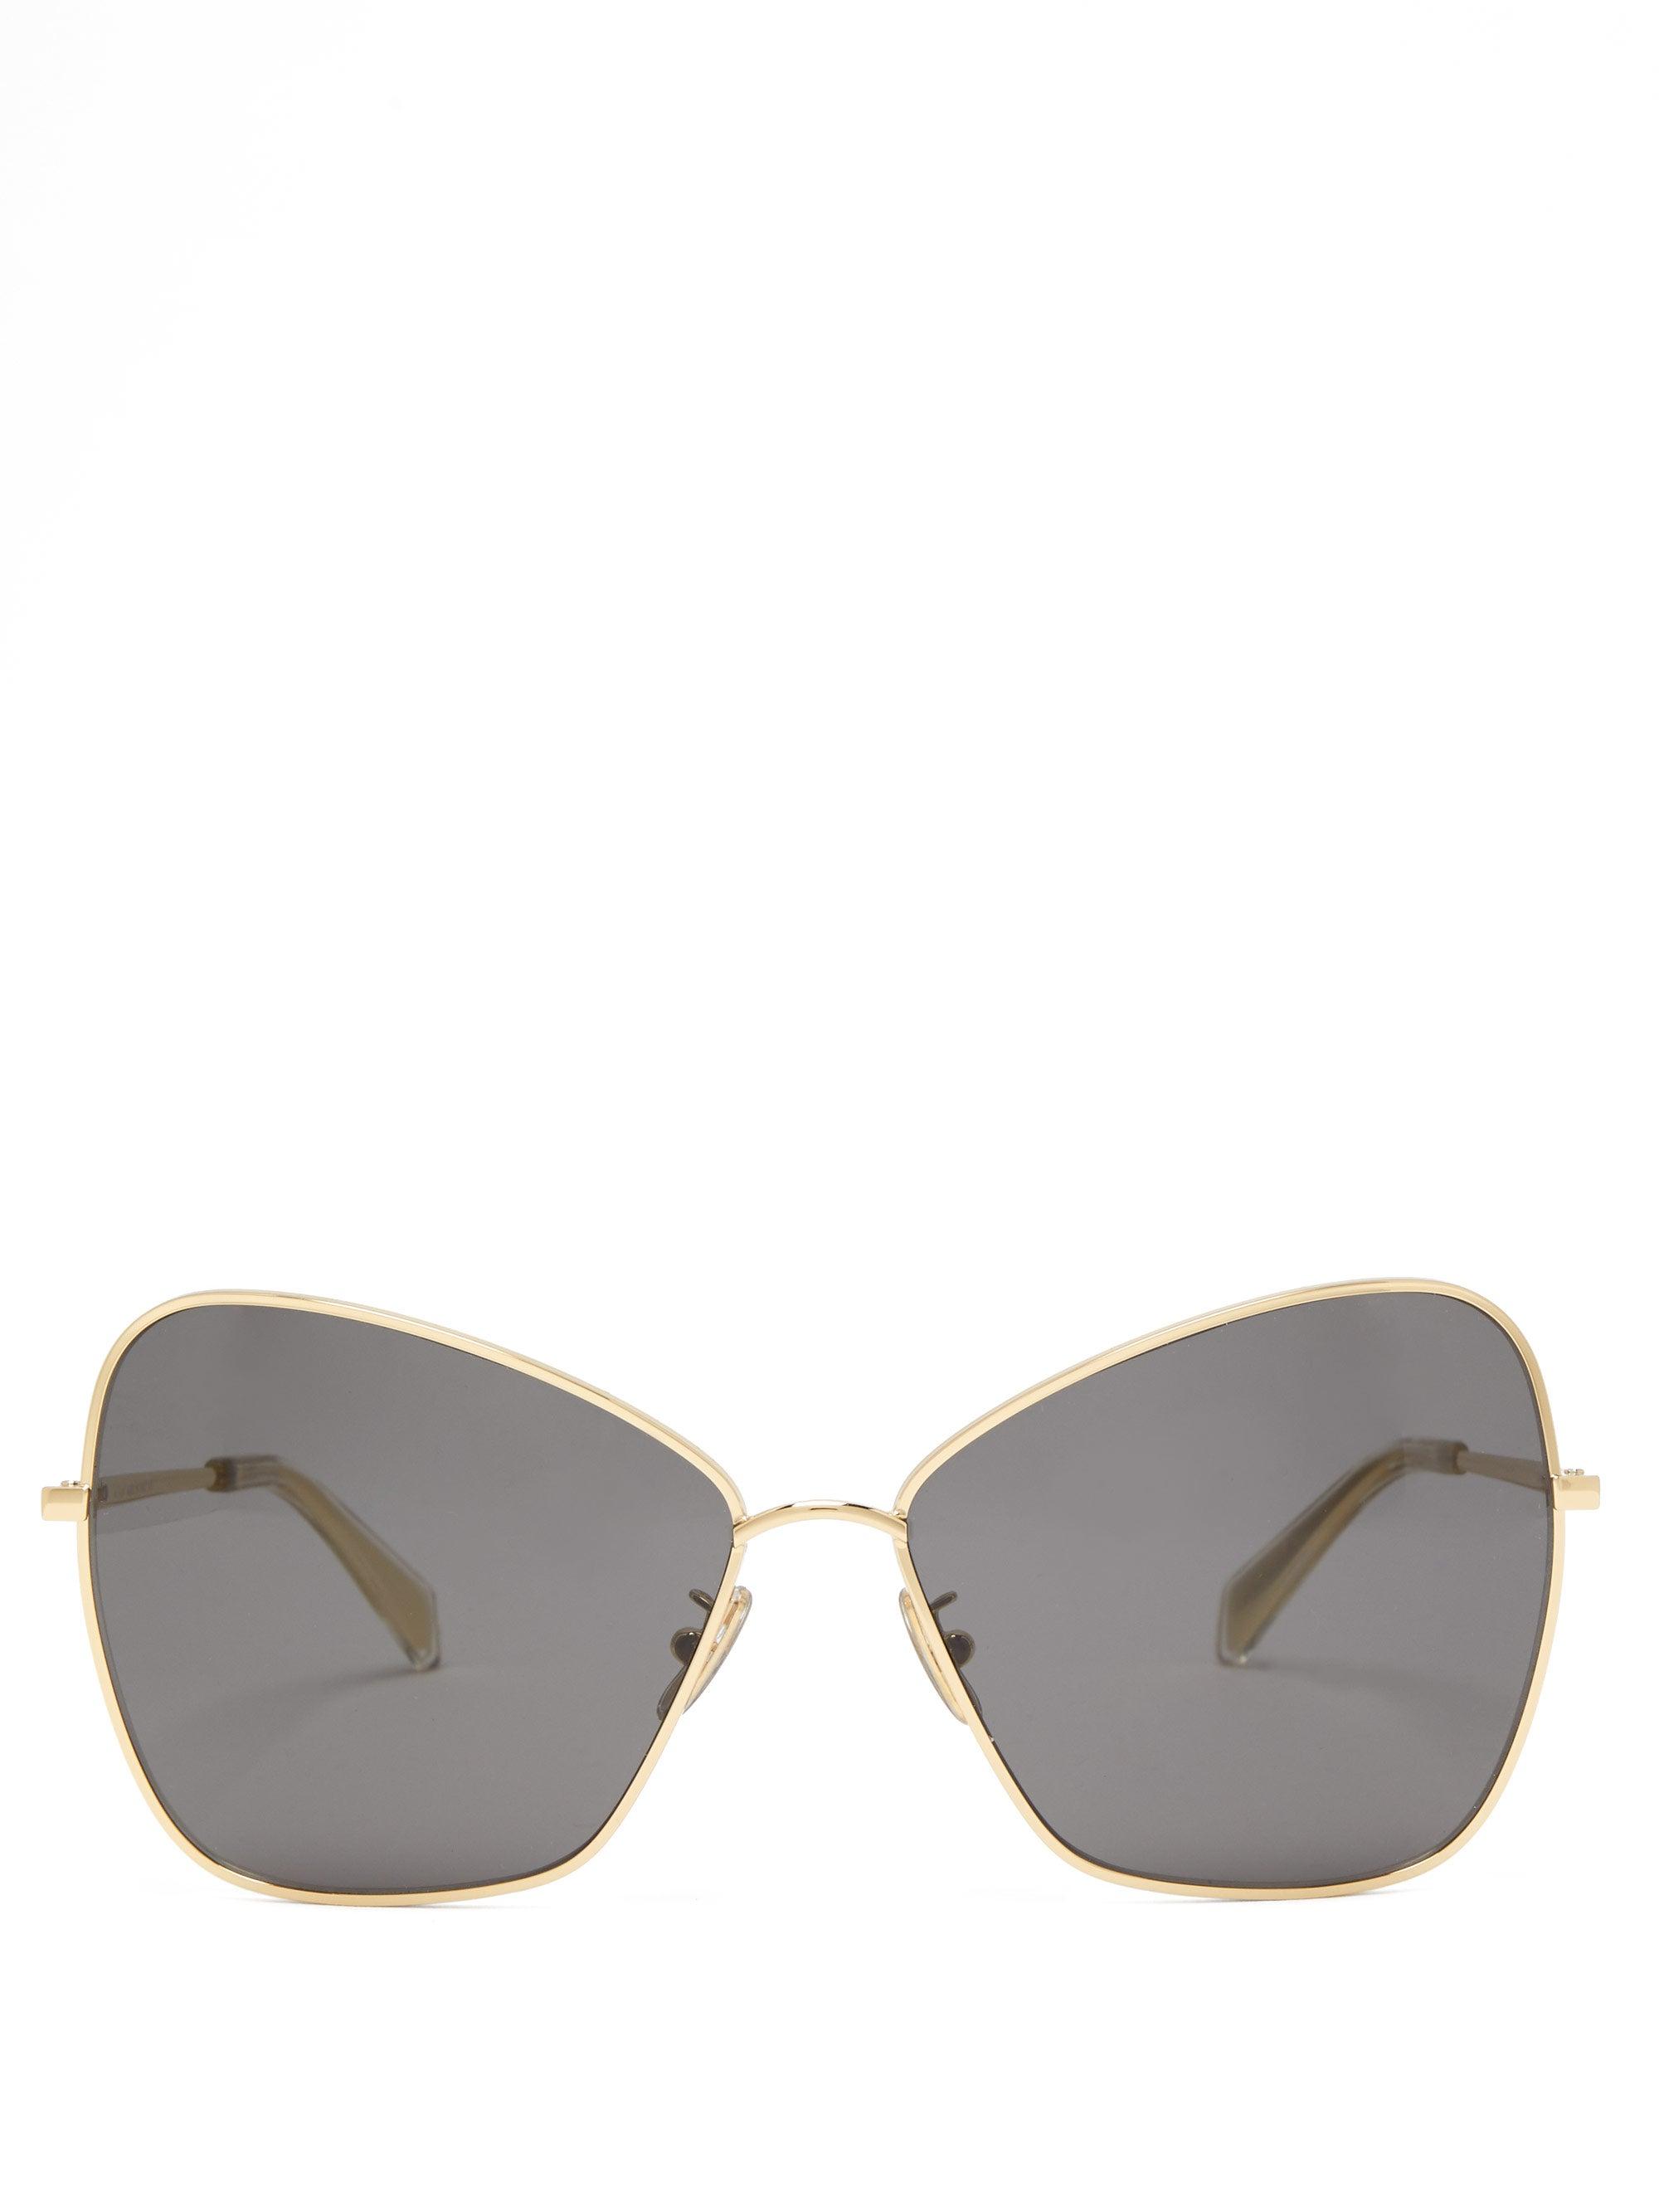 Céline Oversized Butterfly Metal Sunglasses in Gold (Metallic) - Lyst